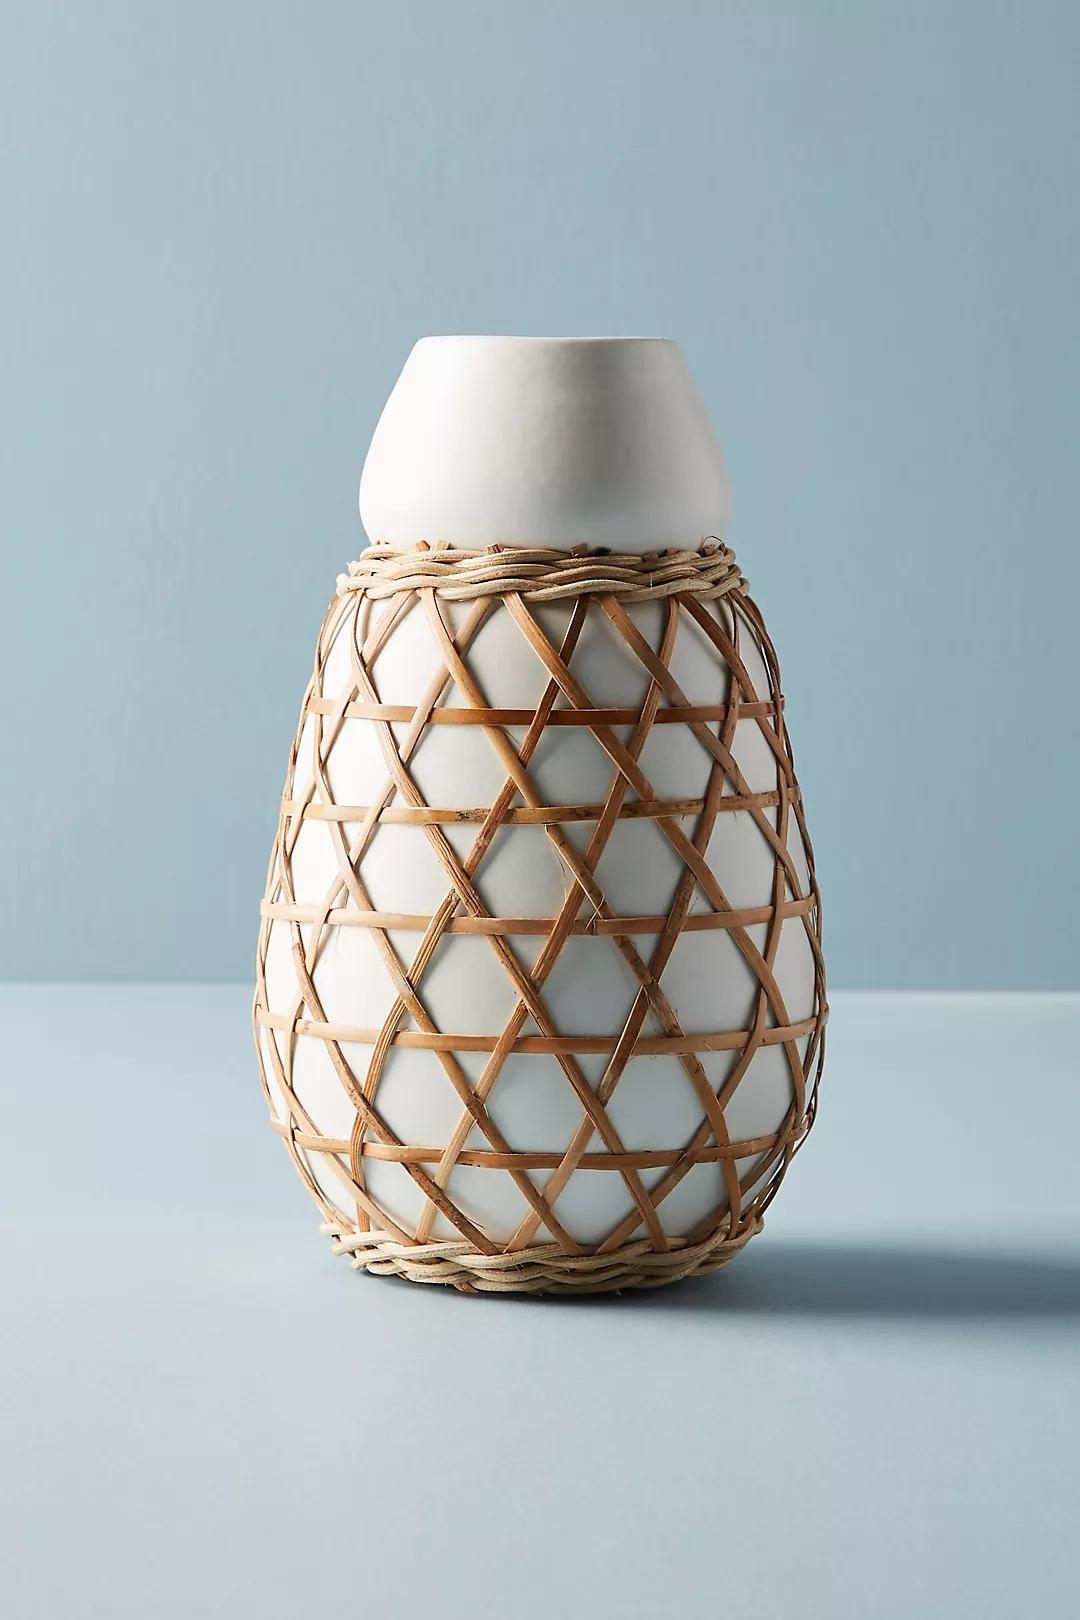 Woven Grass Vase - Image 0